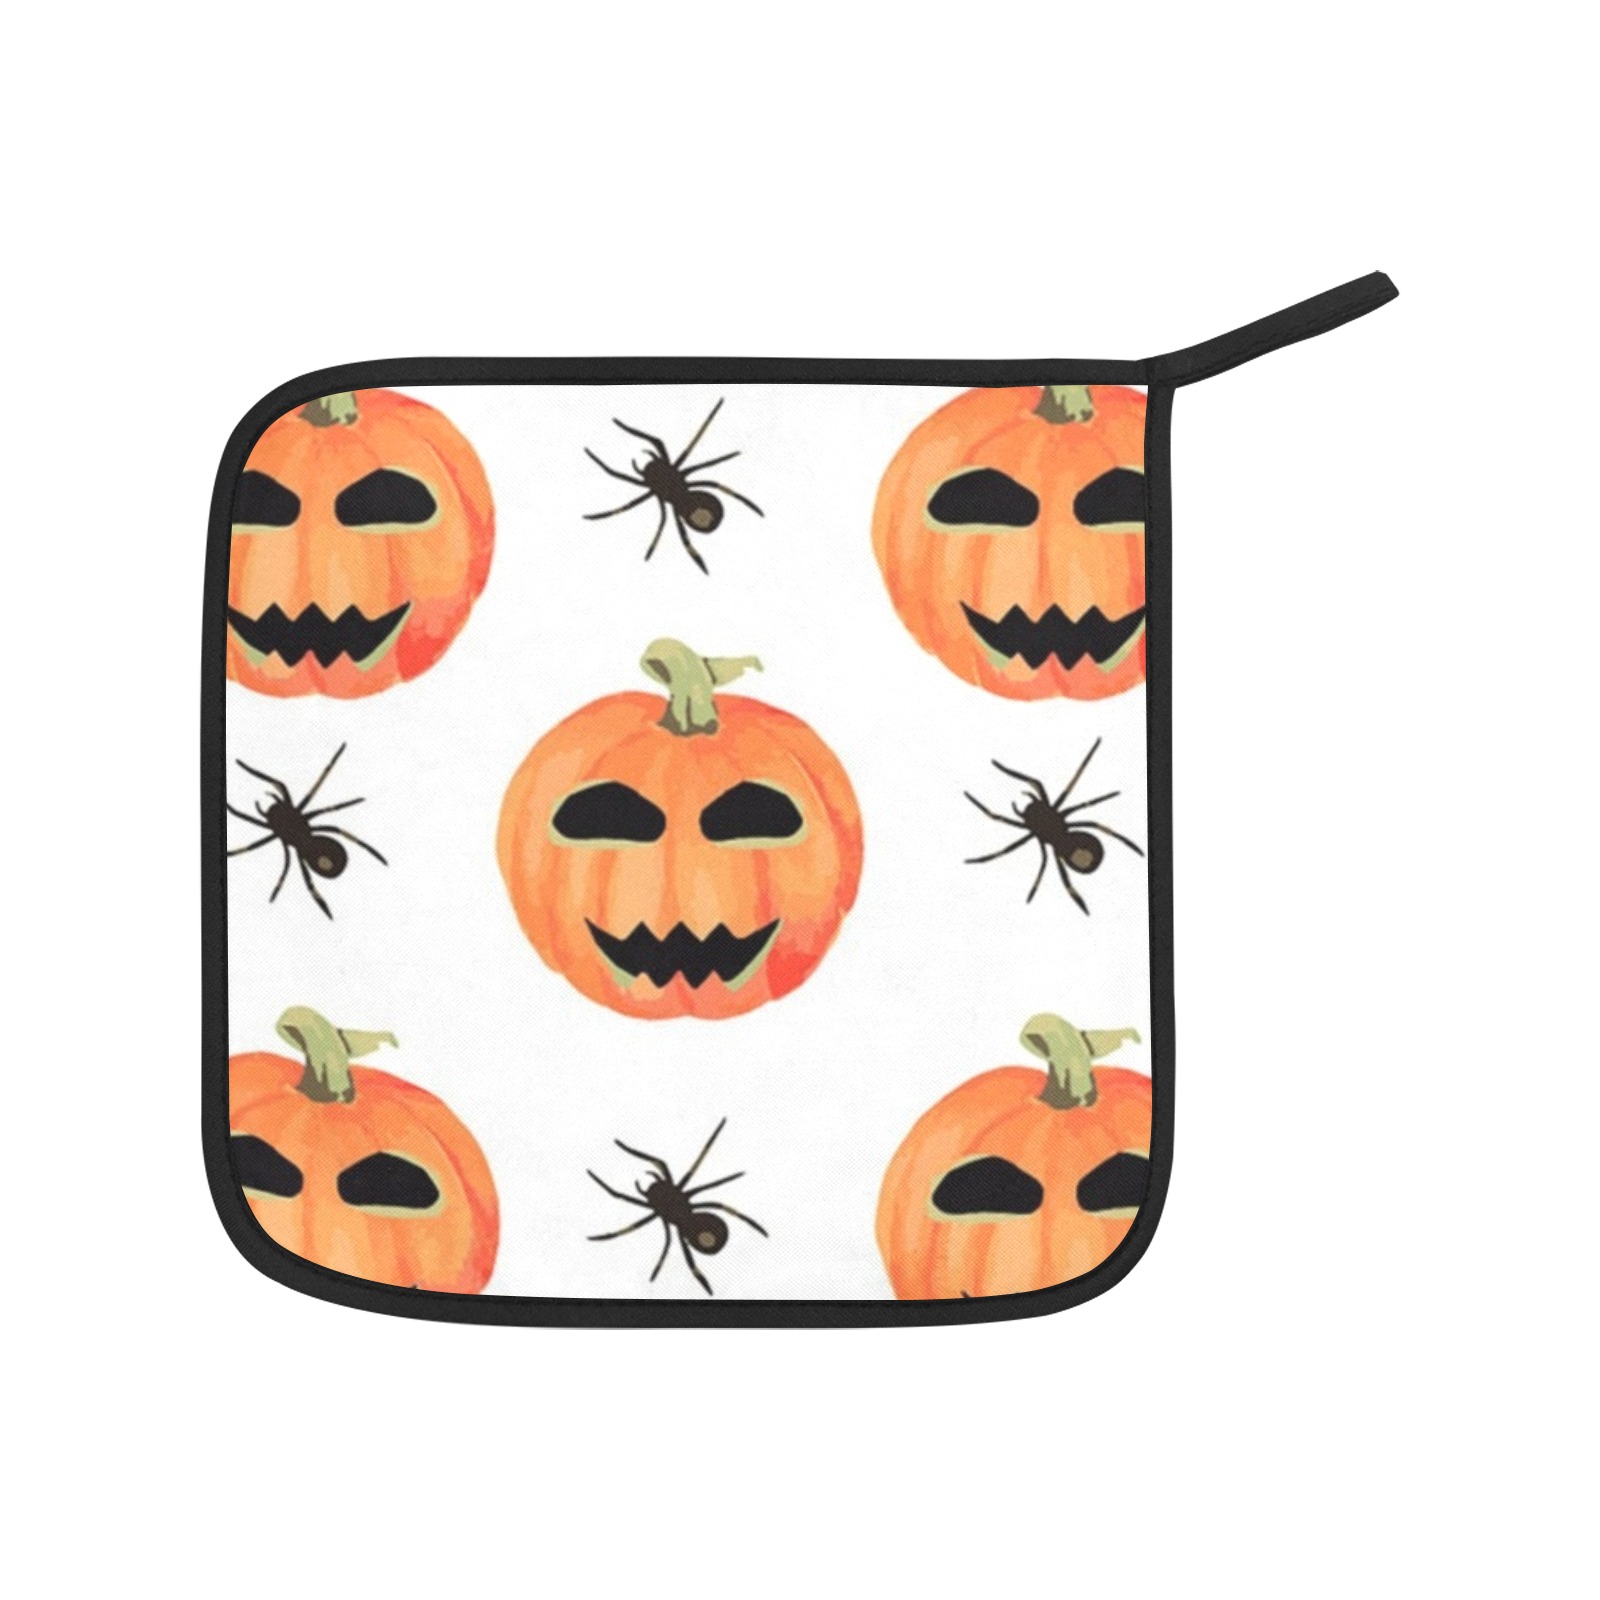 Pumpkins and Spiders Oven Mitt & Pot Holder